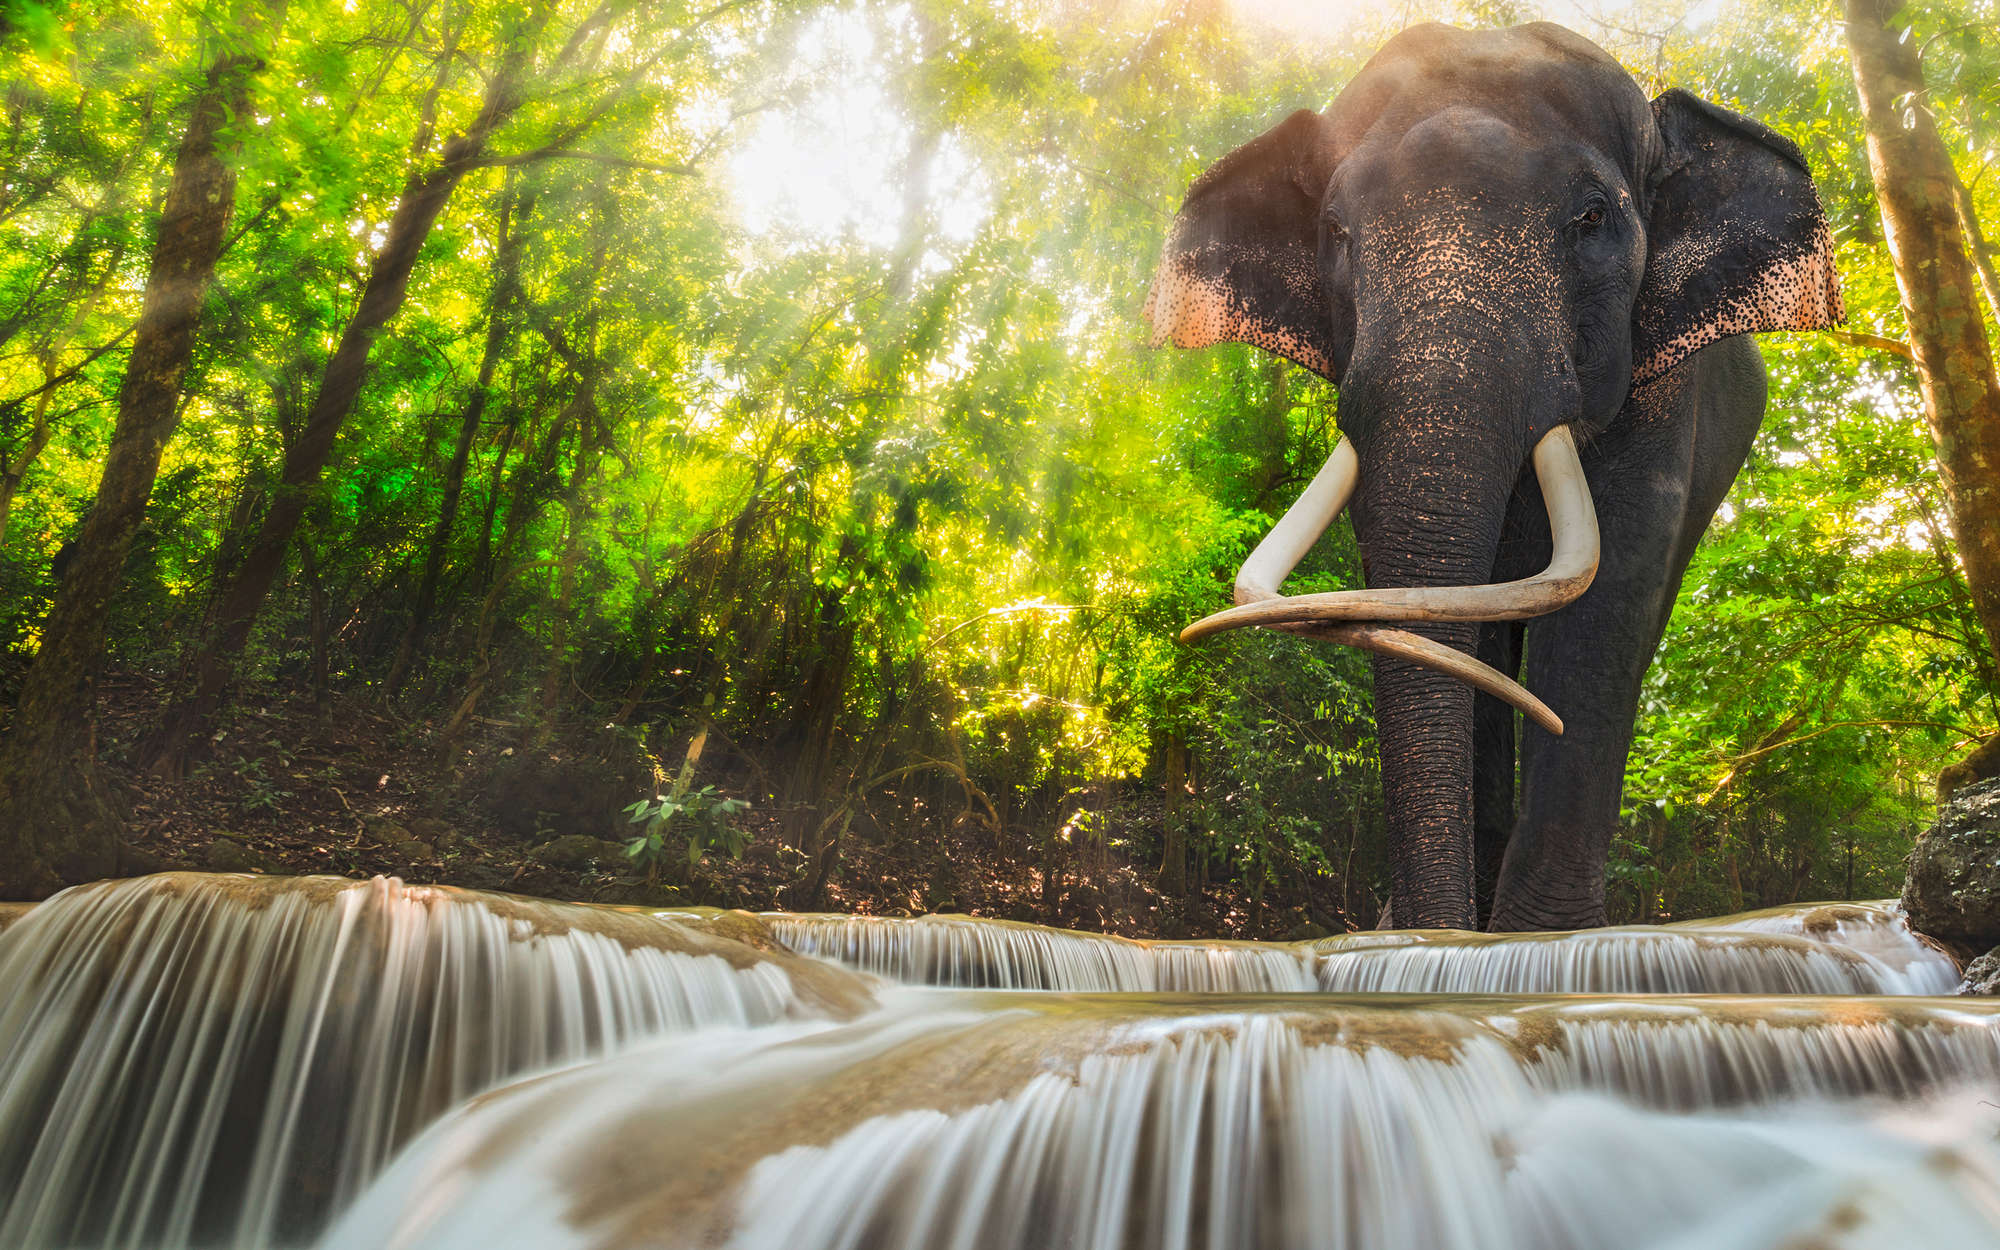             Nature Wallpaper Elephant at the Waterfall - Matt Smooth Non-woven
        